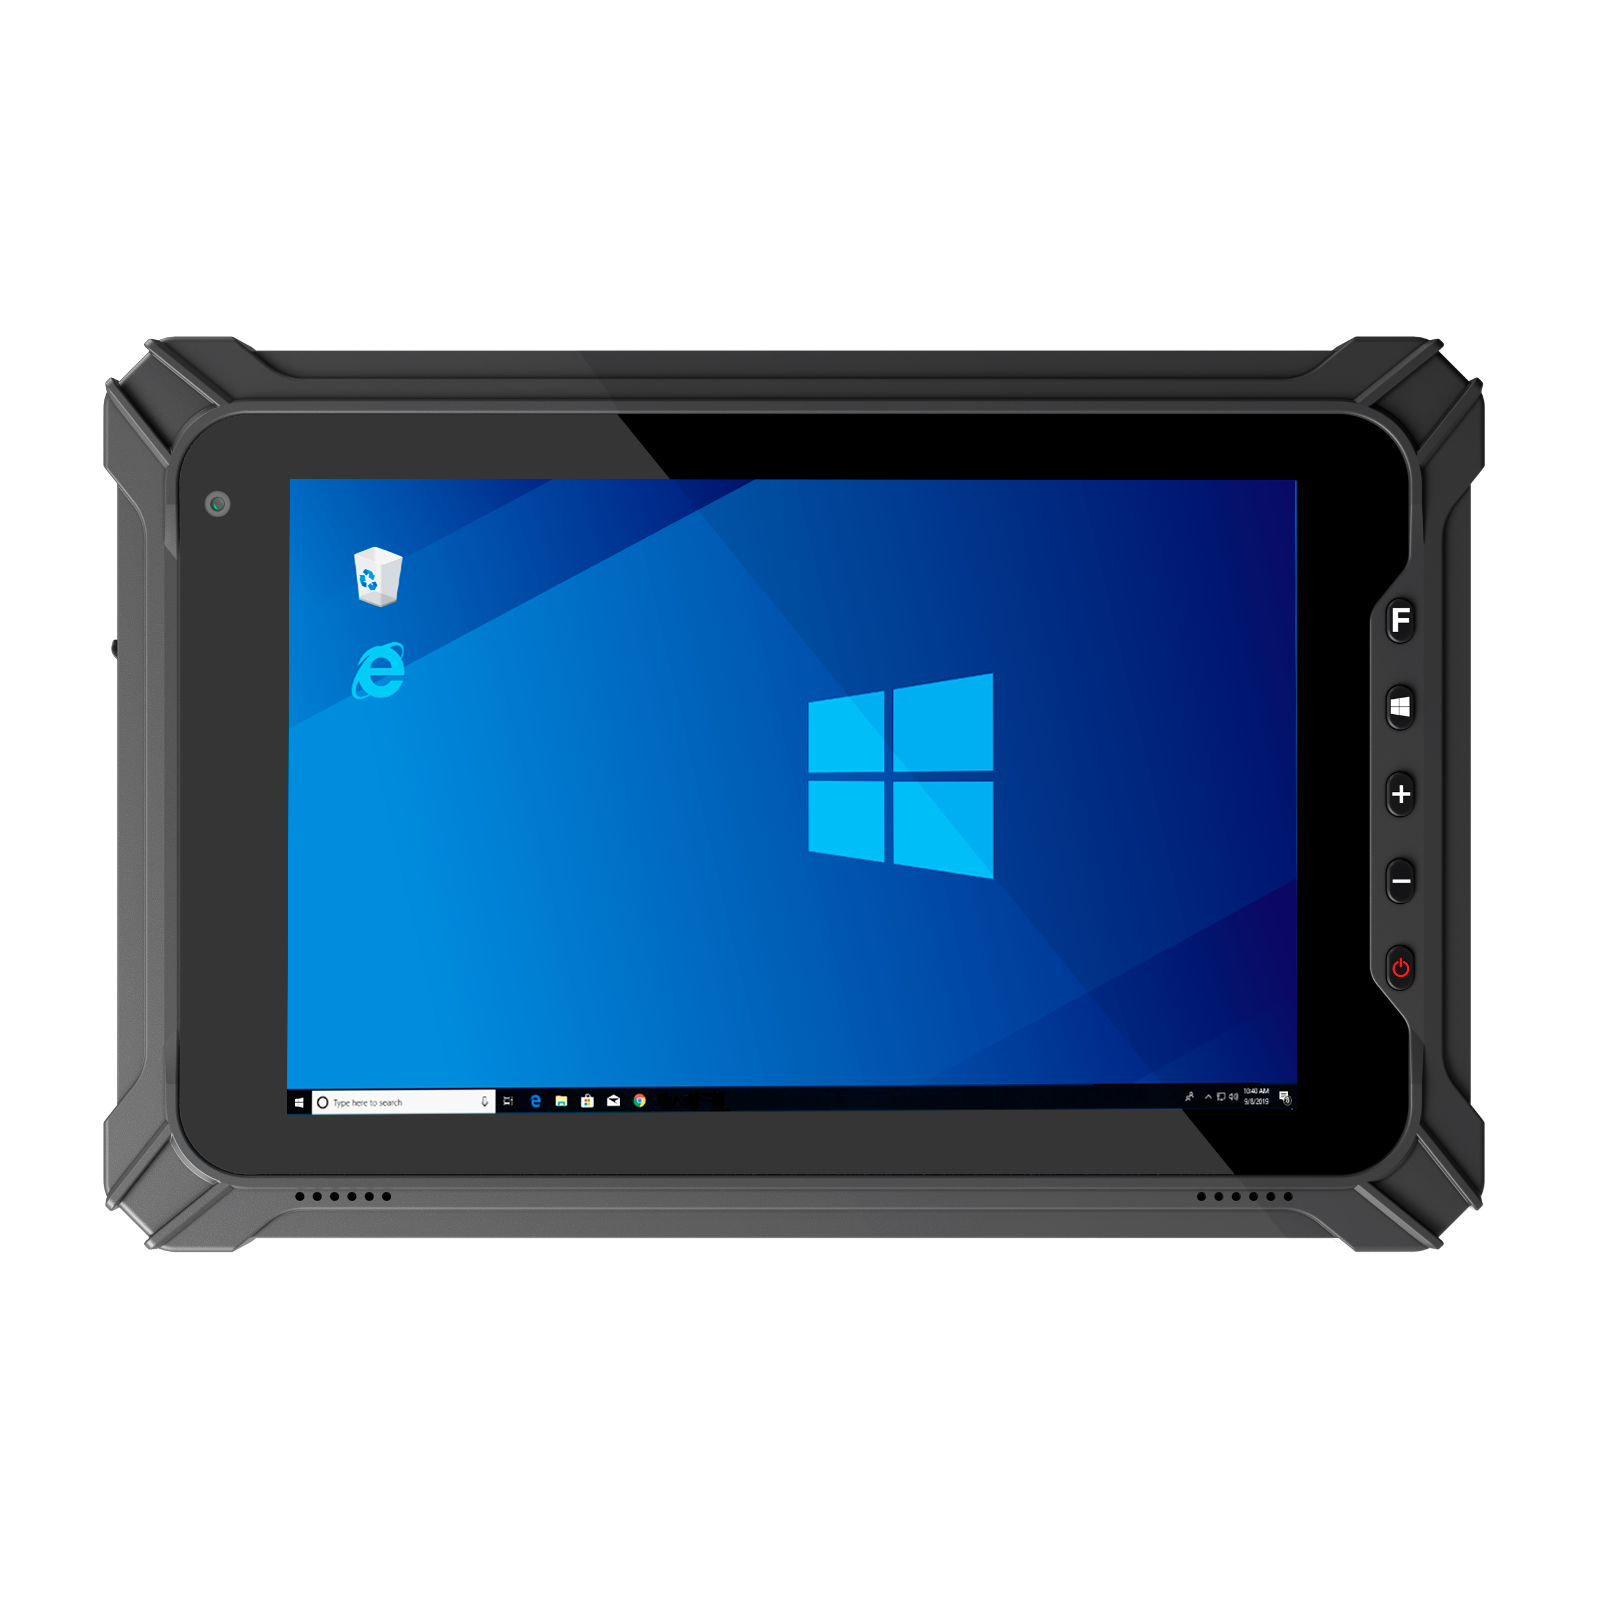 RT18, tablet robusta, tablet windows, rugged tablet, industrial rugged tablet, tableta robusta windows, logistica, industria, logistics tablet